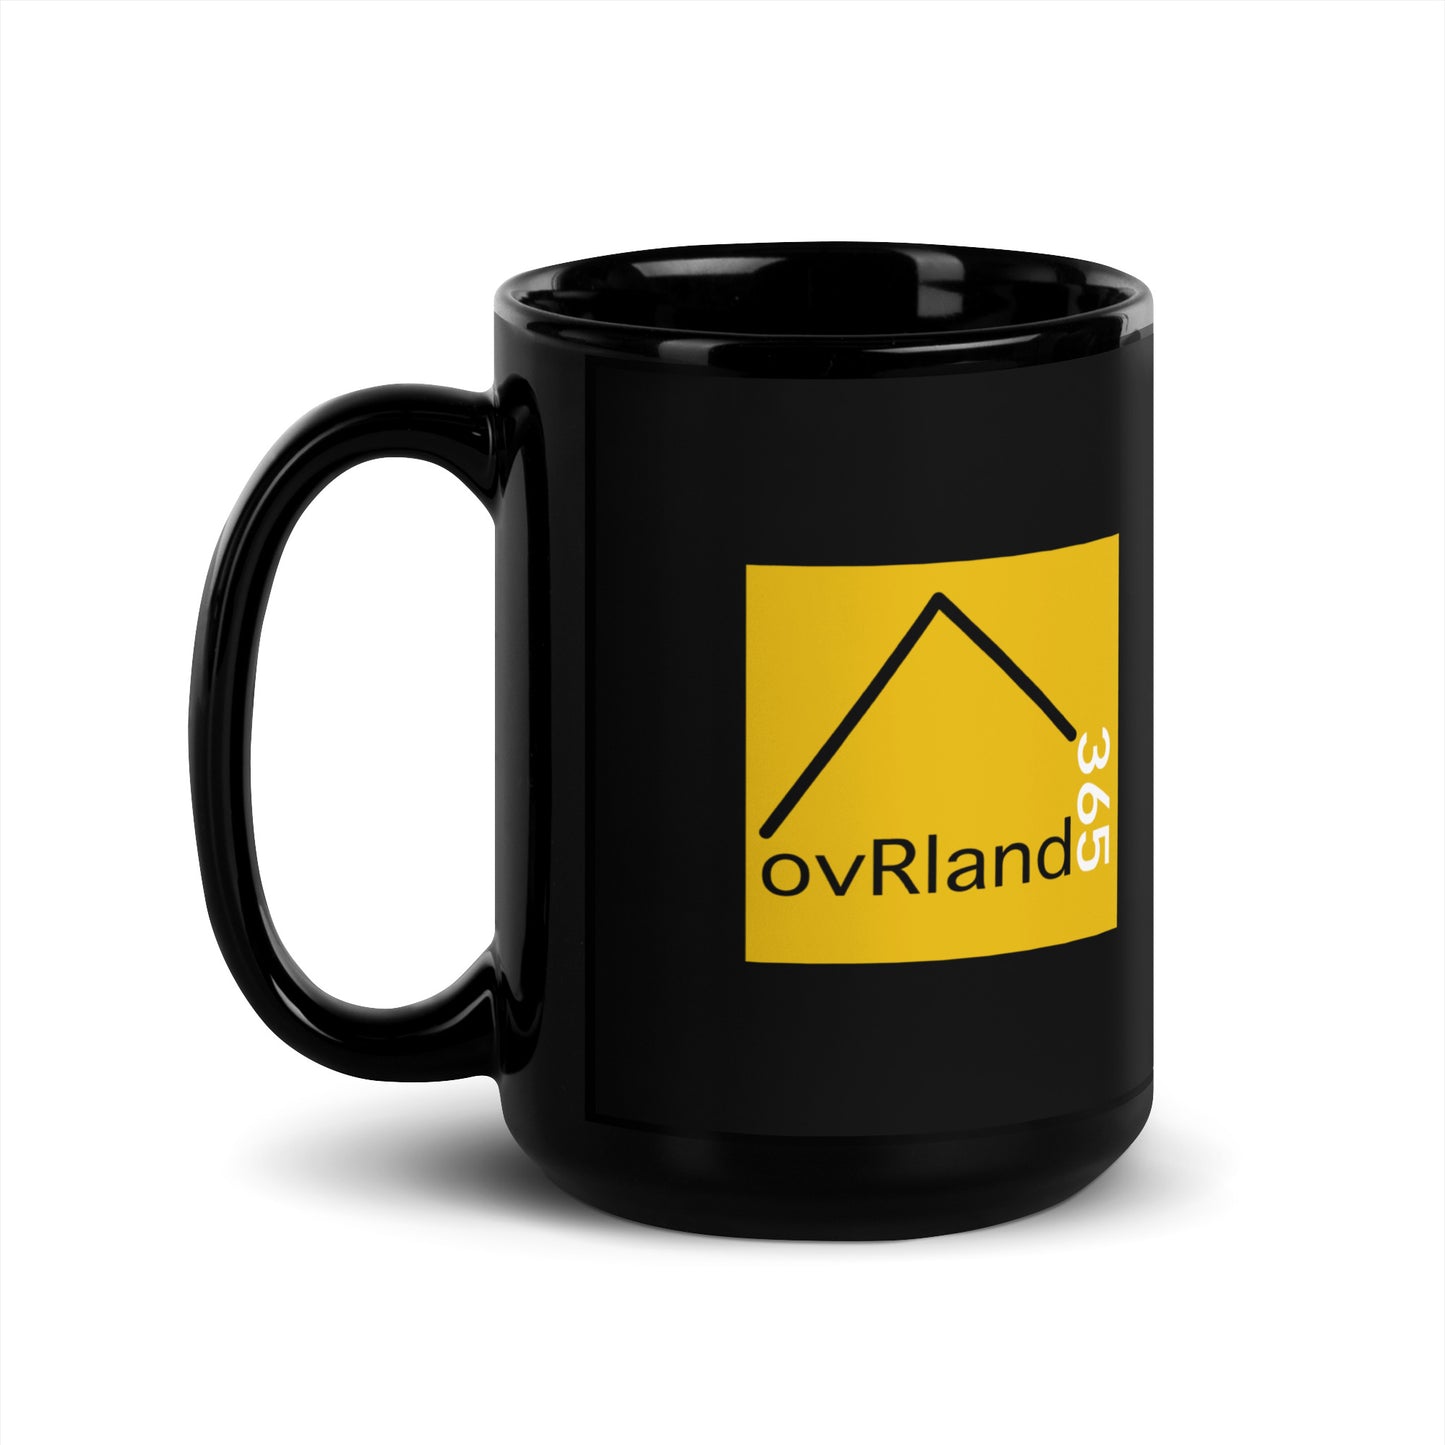 IM NOT LOST IM OVERLANDING 15oz black coffee mug. back view. overland365.com